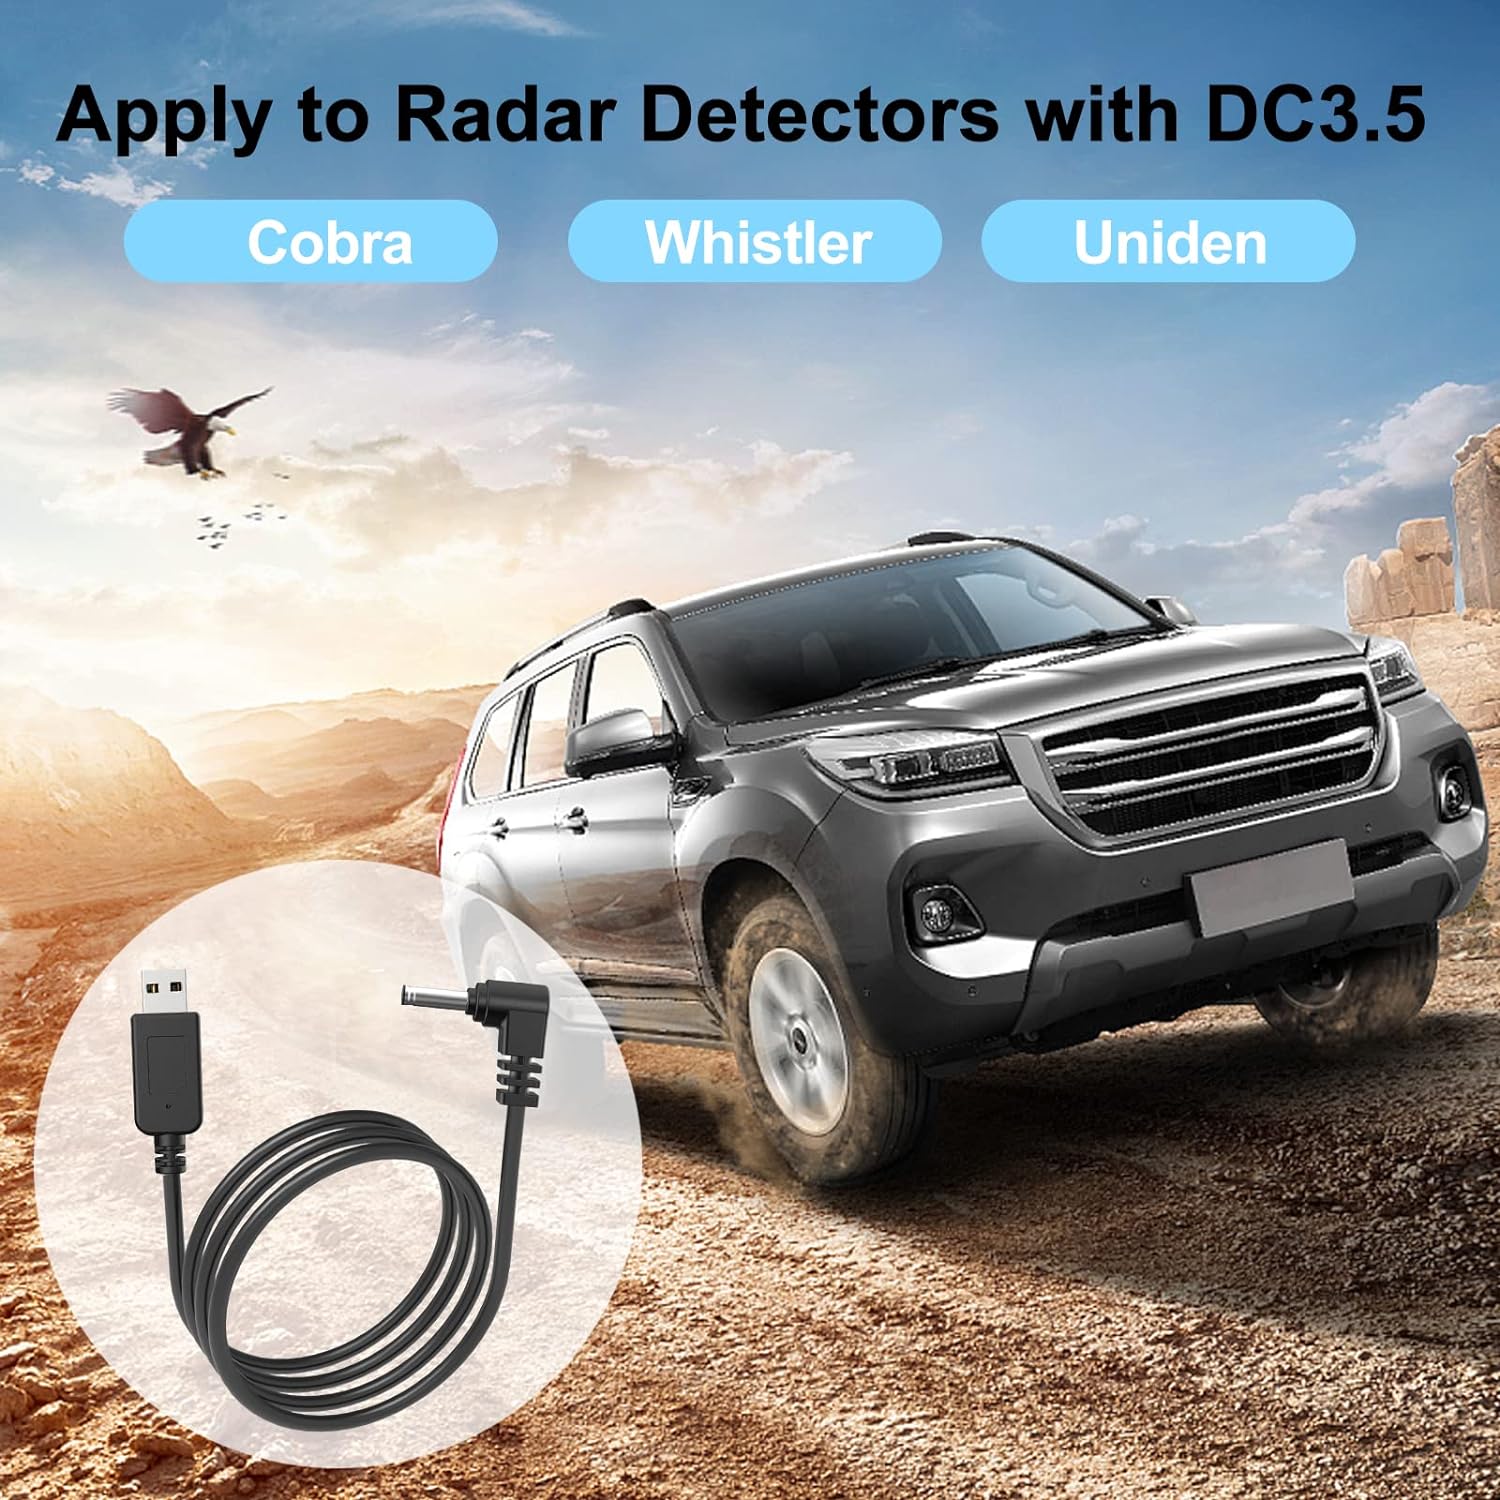 Radar Detector Cable, USB to DC3.5 Plug Cable,for Cobra Whistler Escort Valentine One Uniden Beltronics Radar Detector,Replacement Power Cable for Radar Detectors (DC3.5-3.3ft)